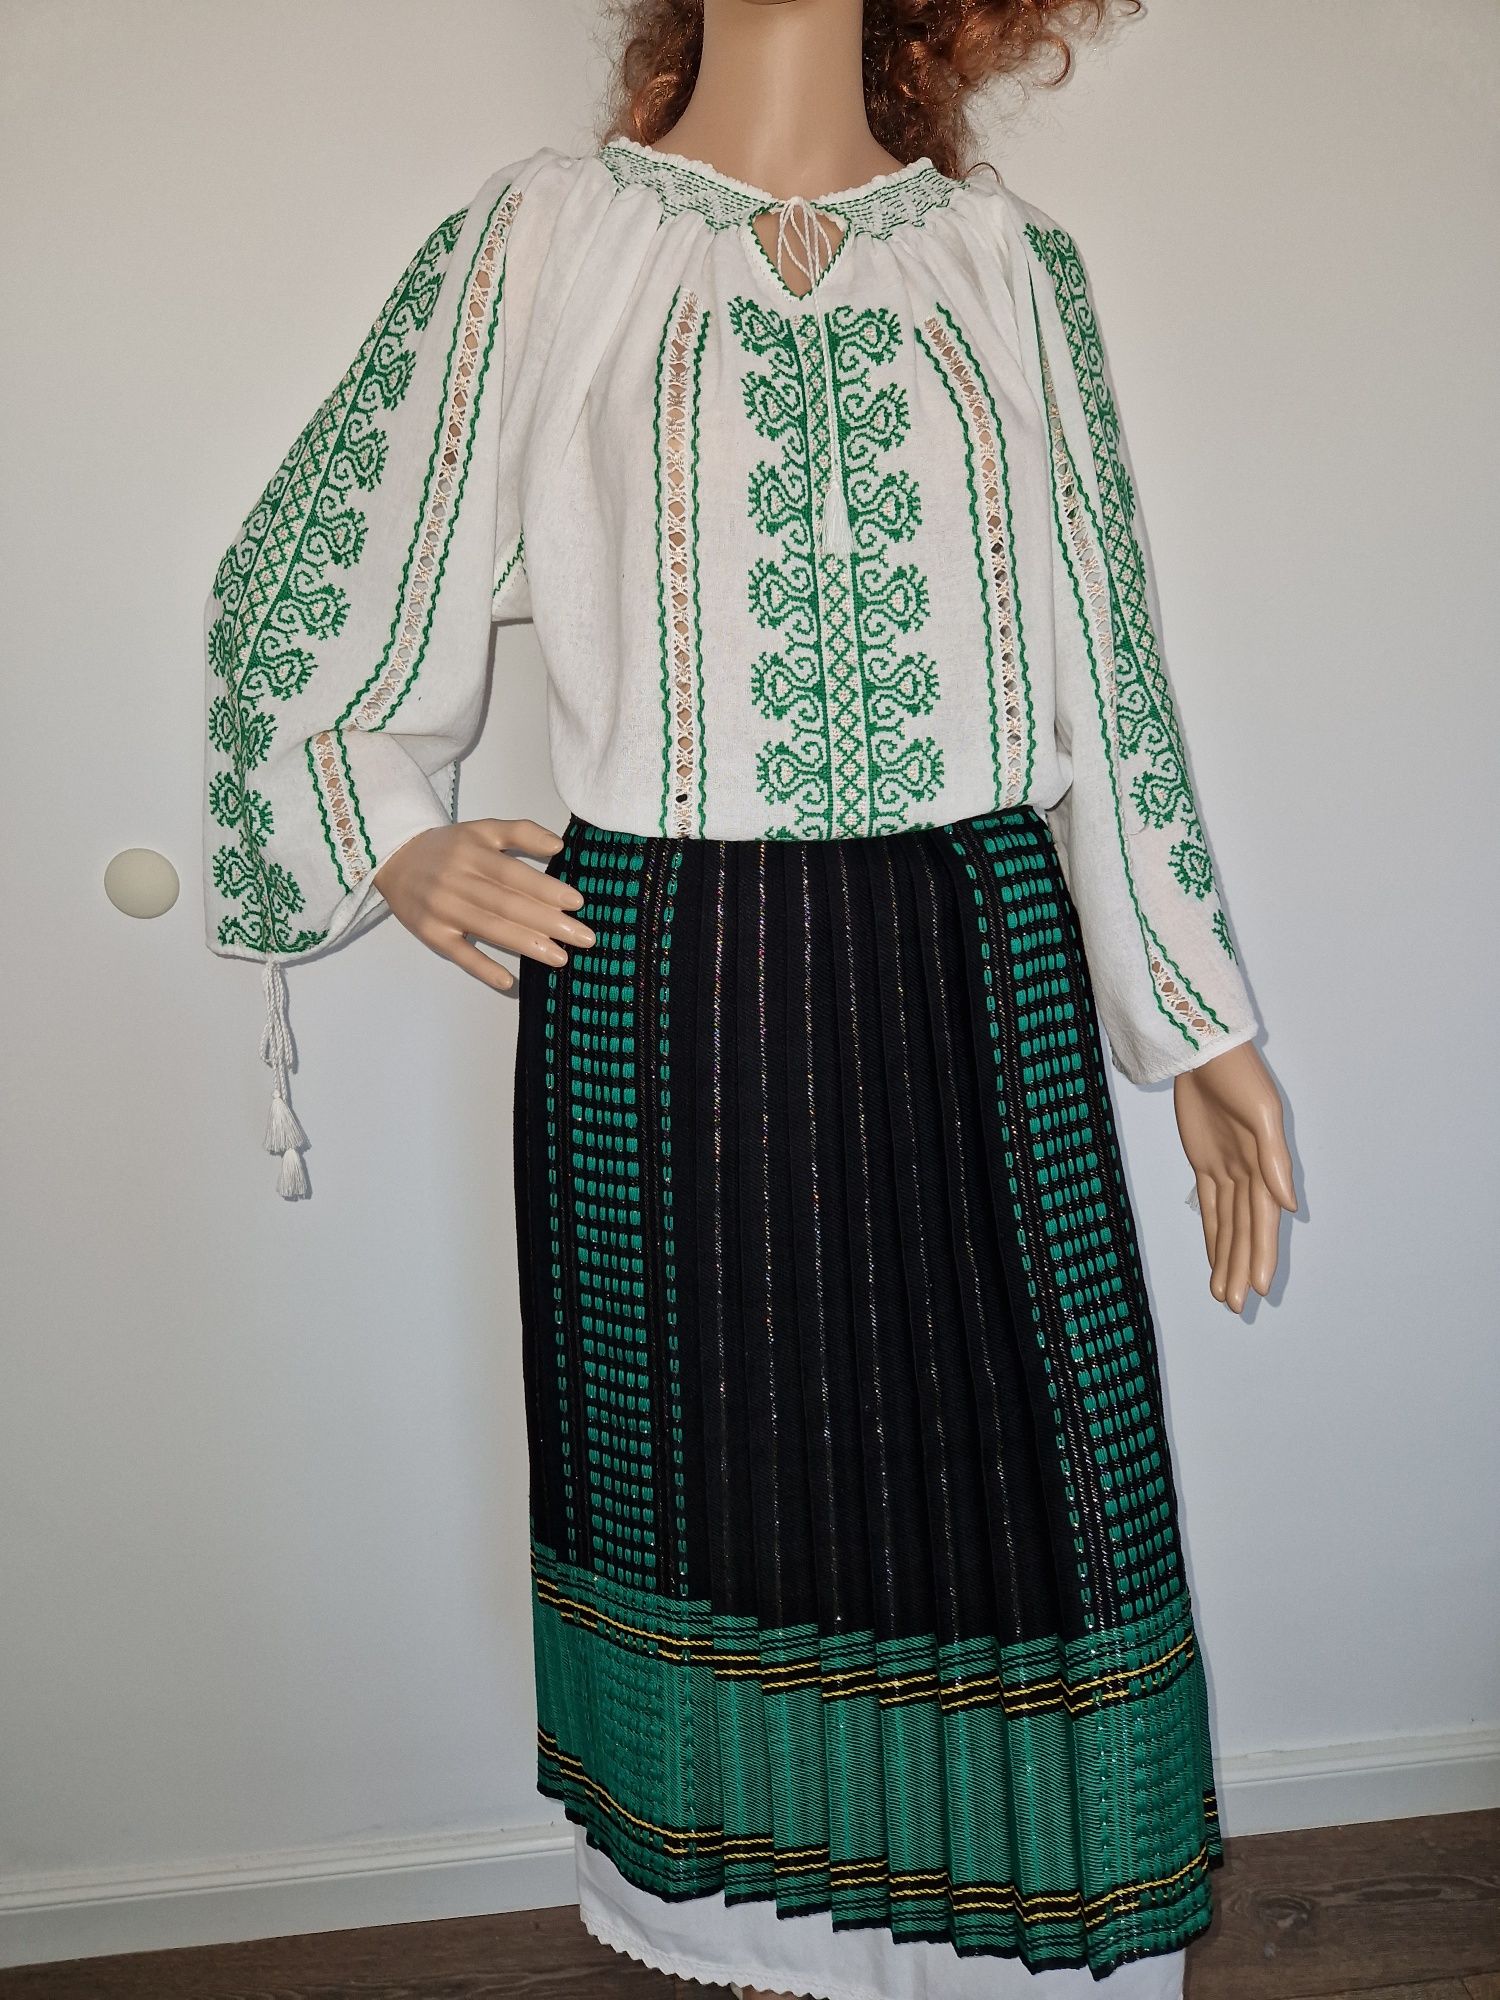 Costum popular traditional cusut manual